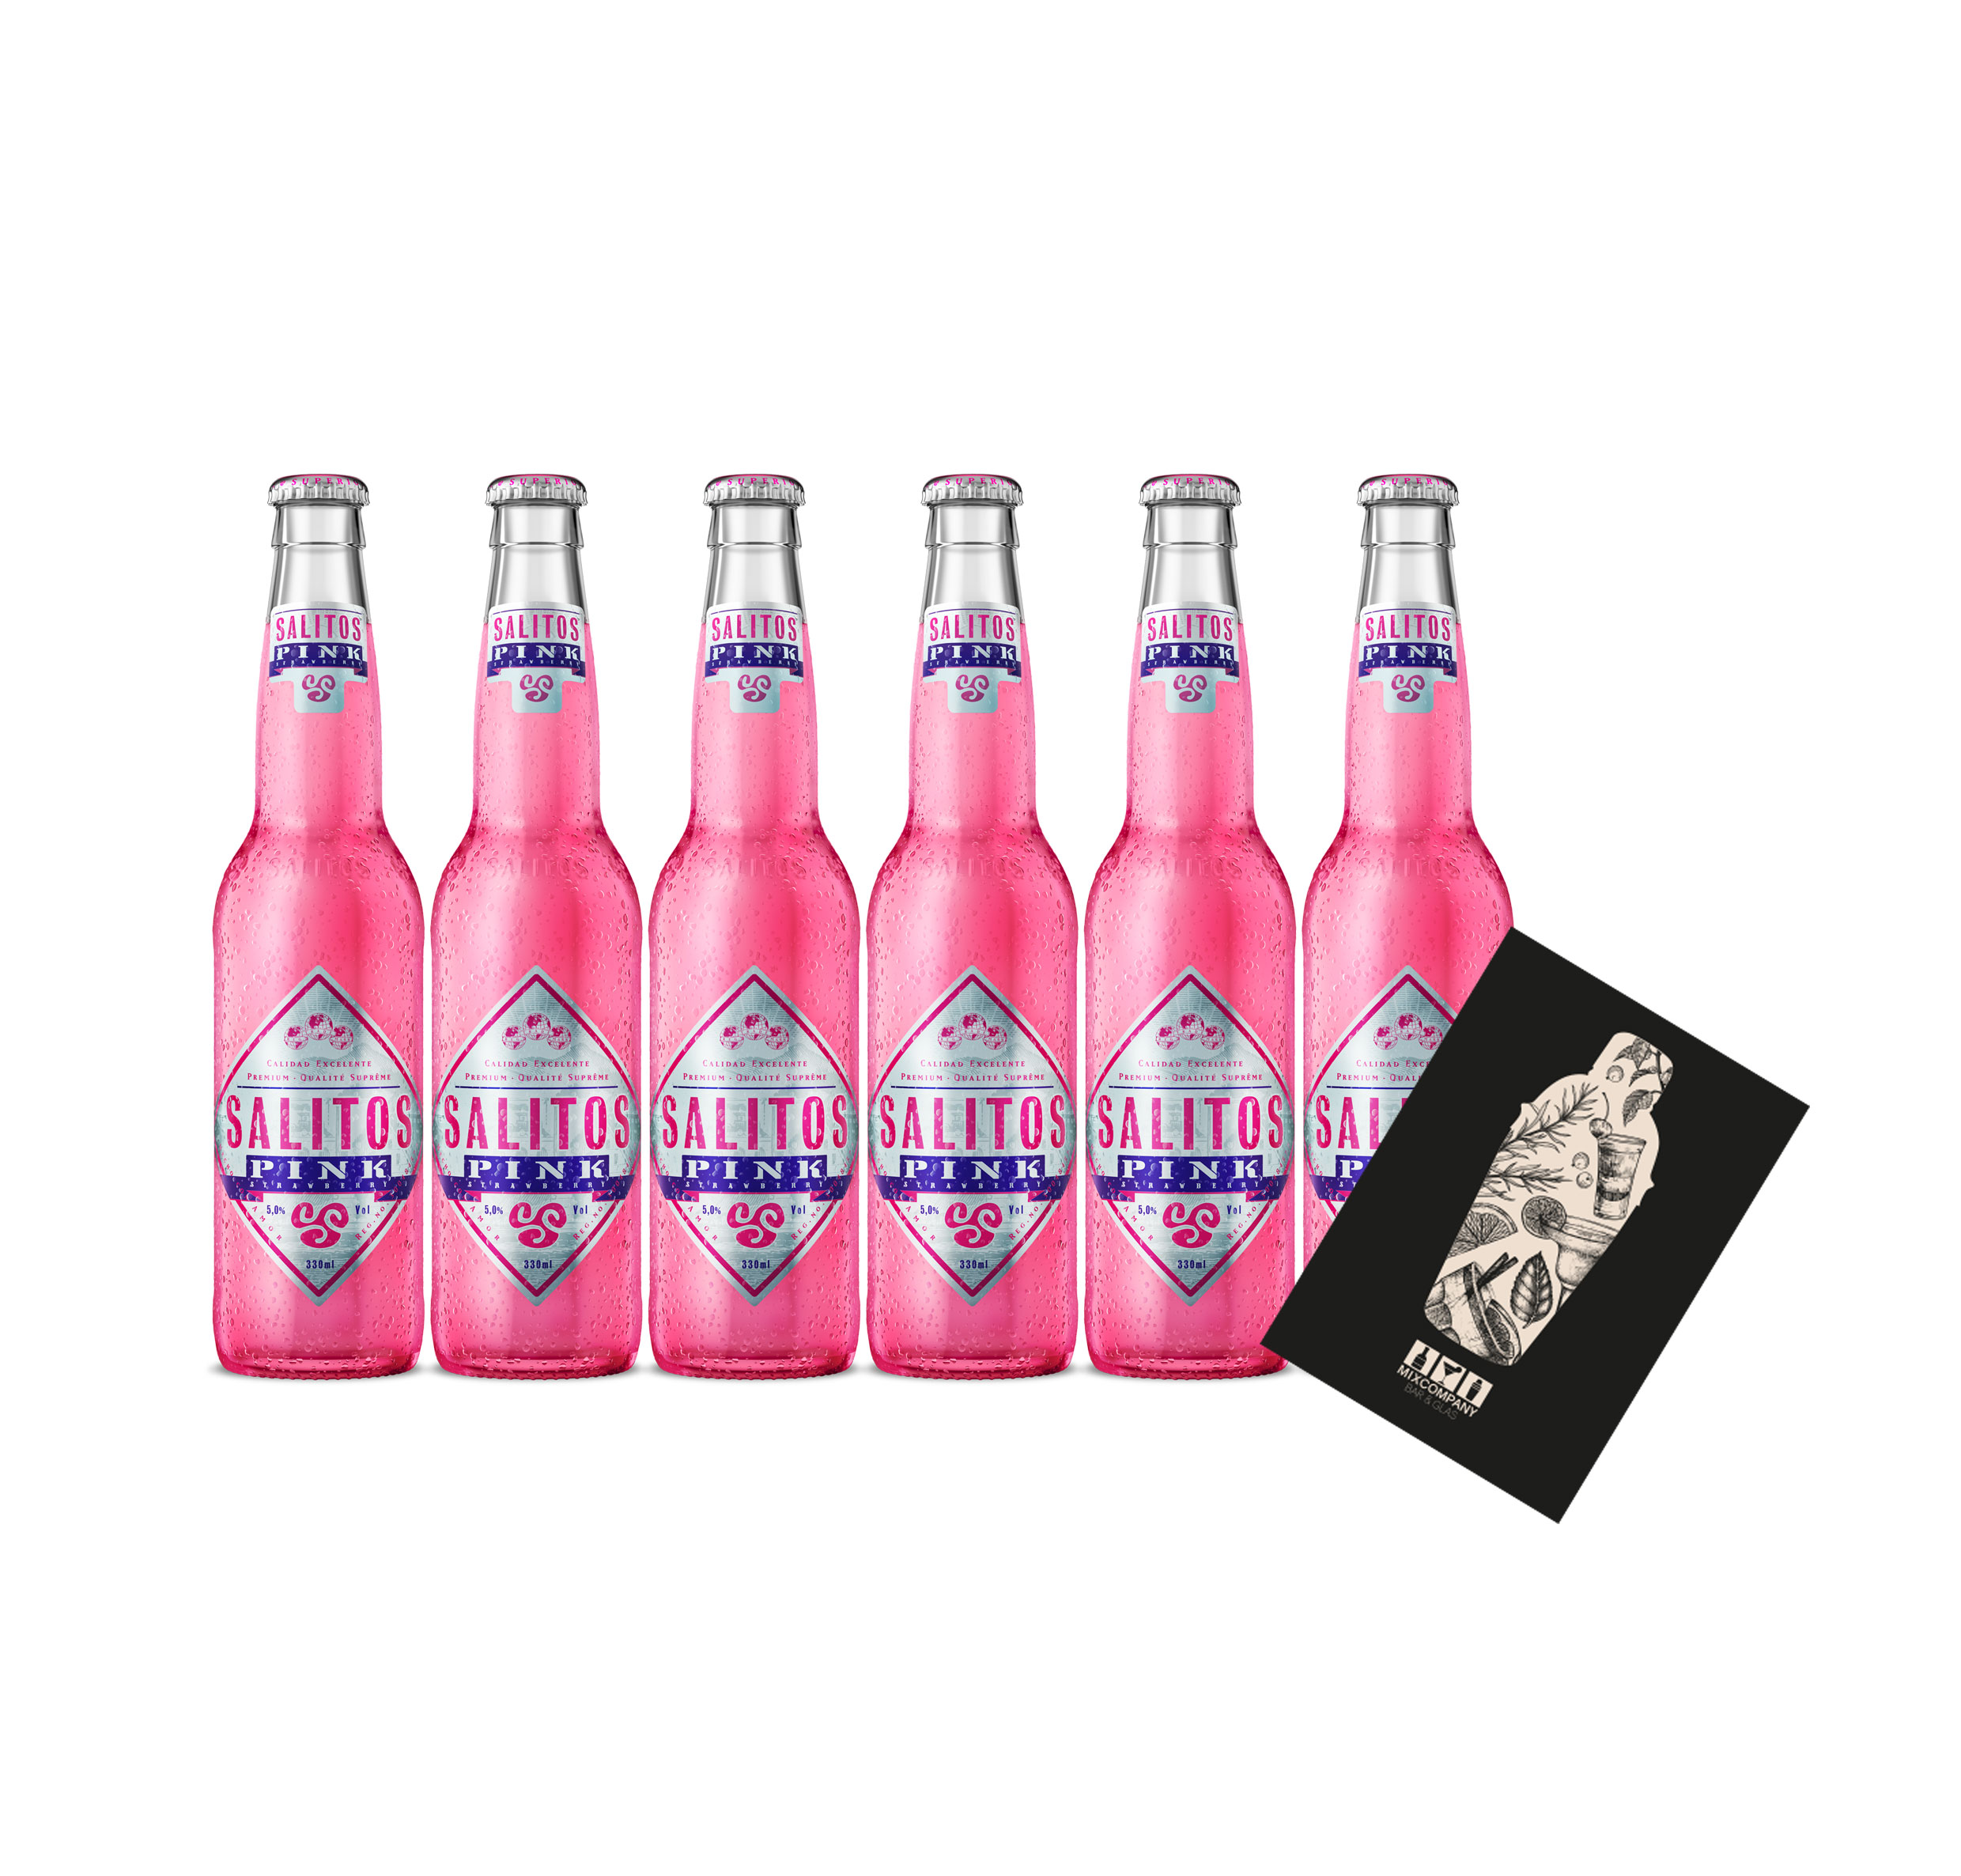 Salitos 6er Set Bier Salitos Pink Beer 6x 0,33L (5% Vol) inkl. Pfand MEHRWEG mit Mixcompany Grußkarte- [Enthält Sulfite]